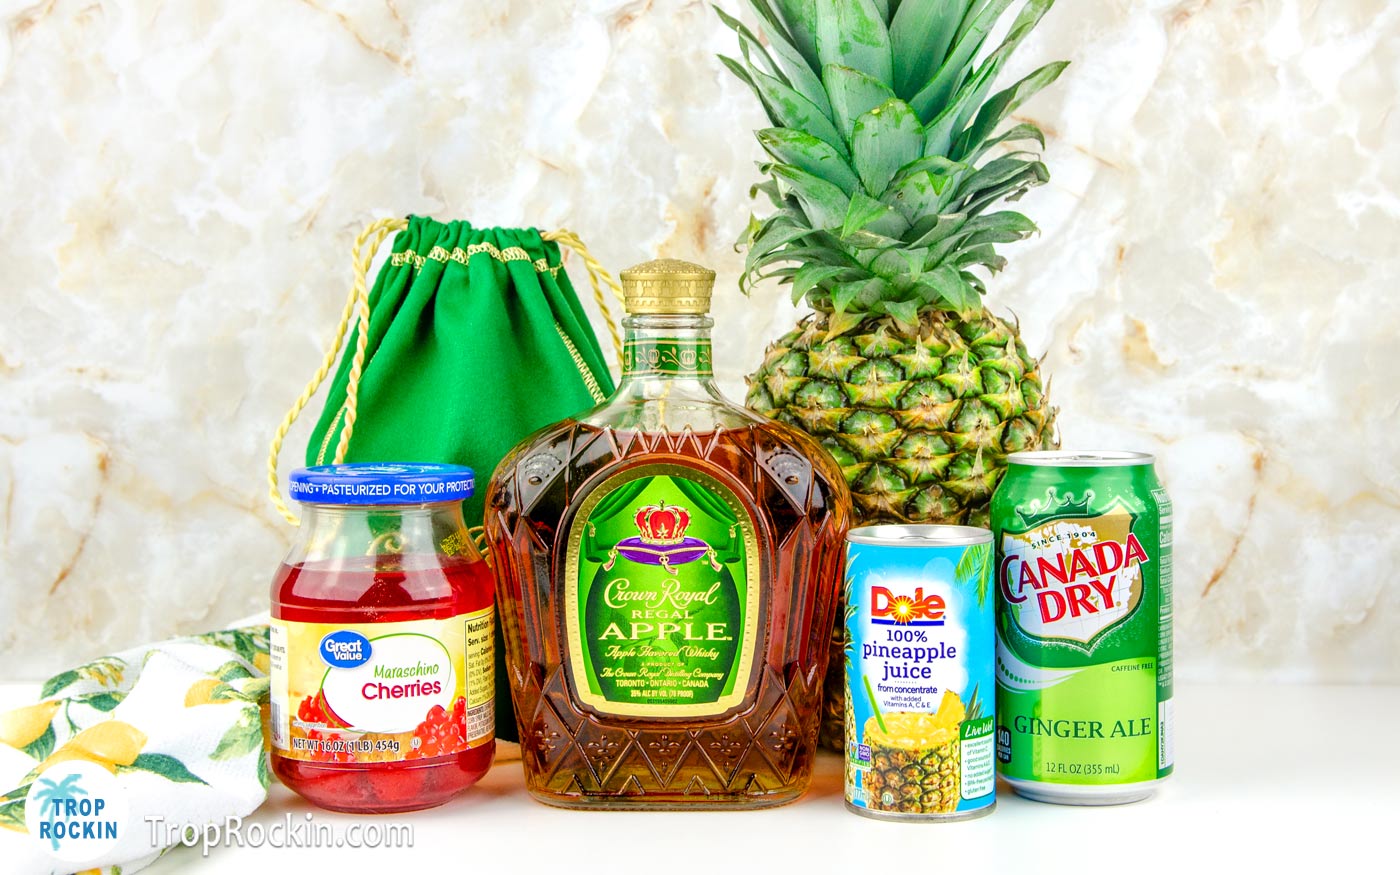 Crown Apple and Pineapple Juice cocktail ingredients displayed on table top.